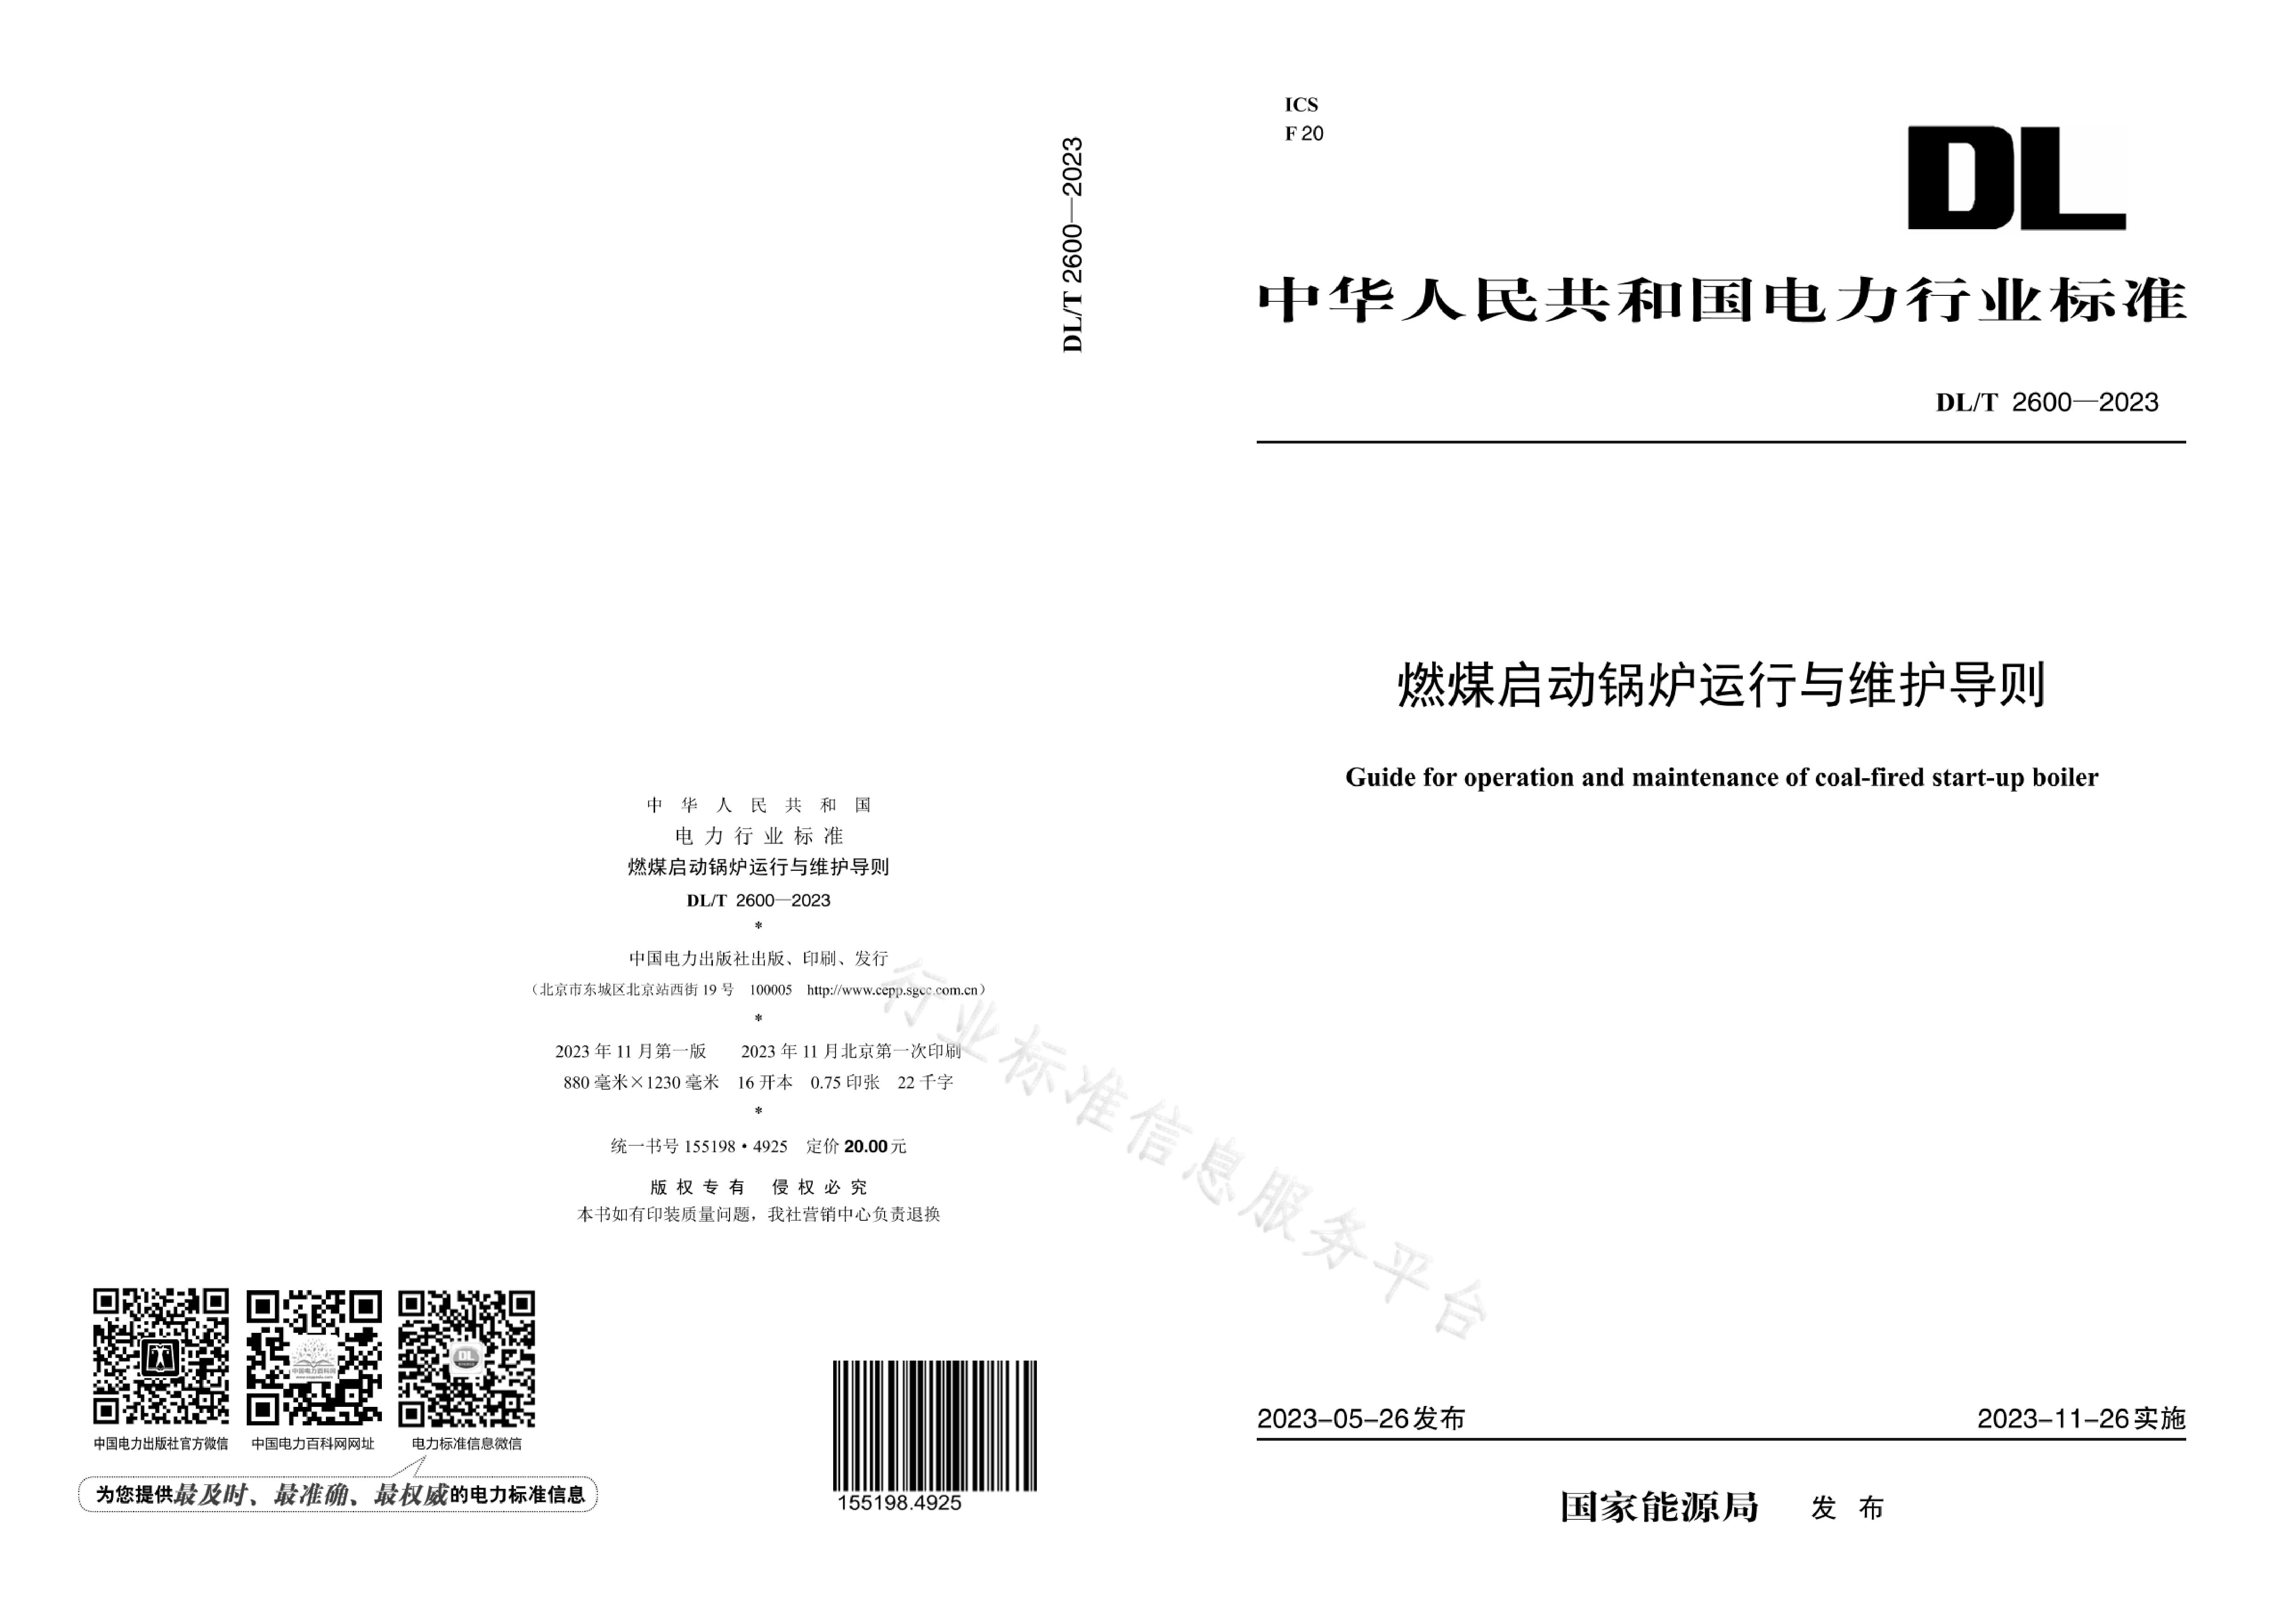 DL/T 2600-2023封面图